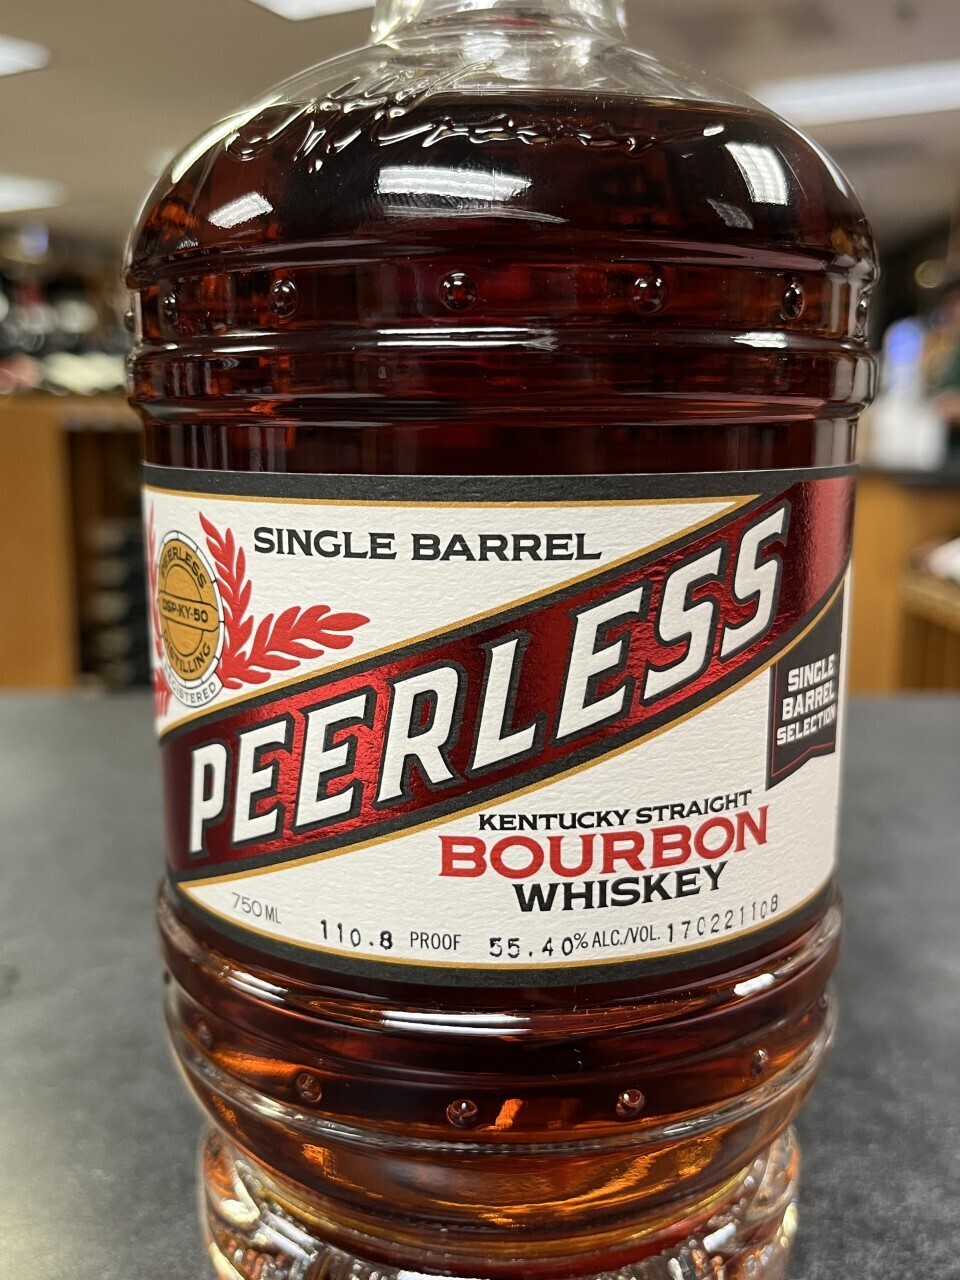 Peerless Single Barrel Bourbon (Ace Beverage/Cinder BBQ) 110.8 proof